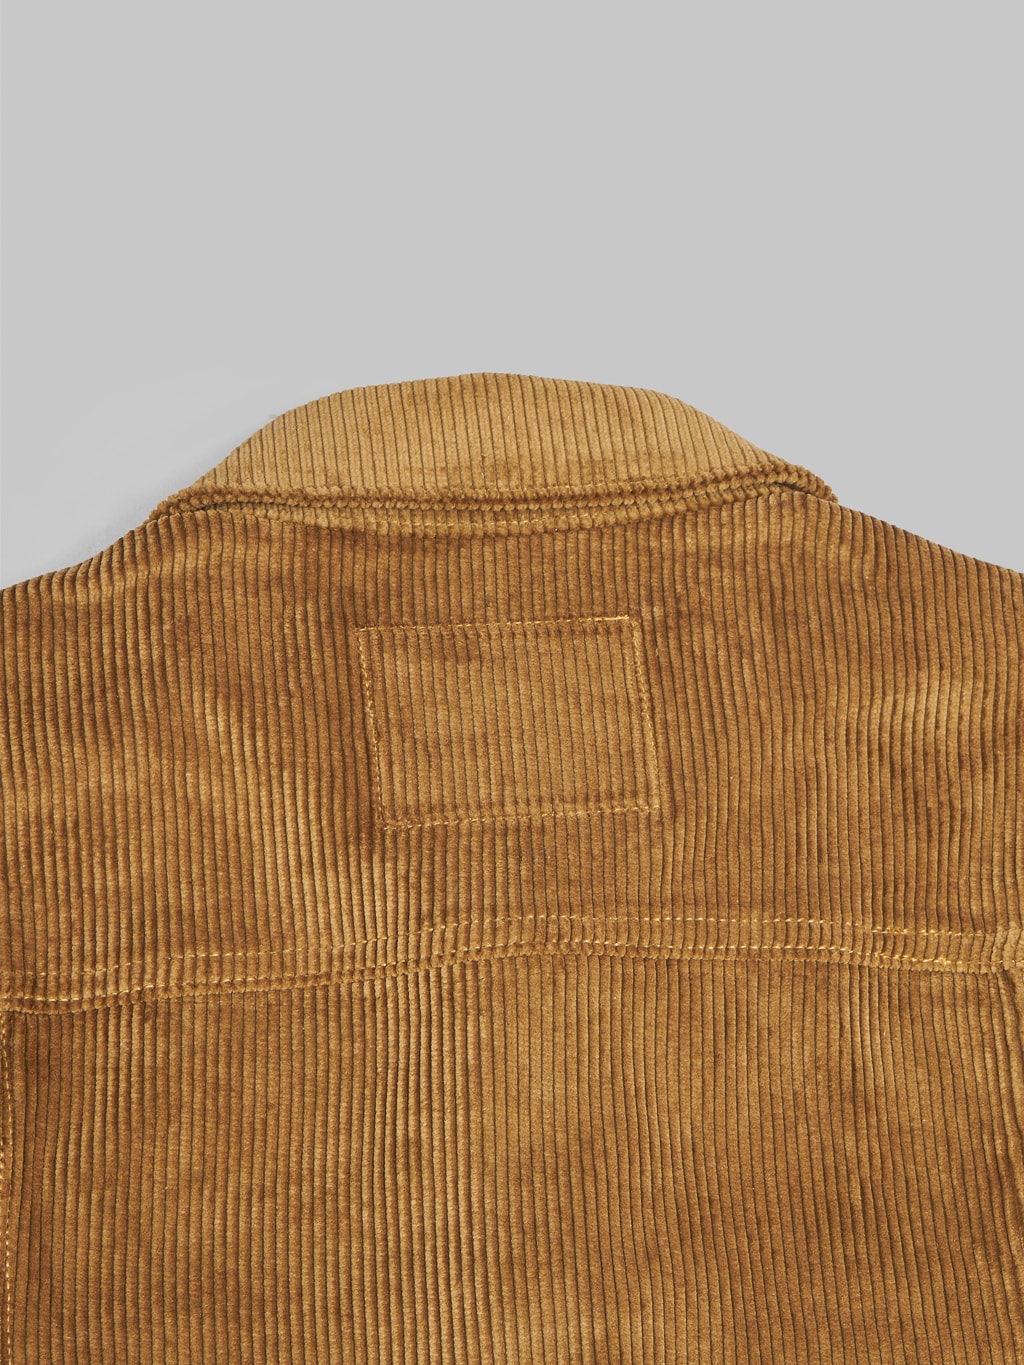 Freenote Cloth Classic Jacket Gold Corduroy stitching